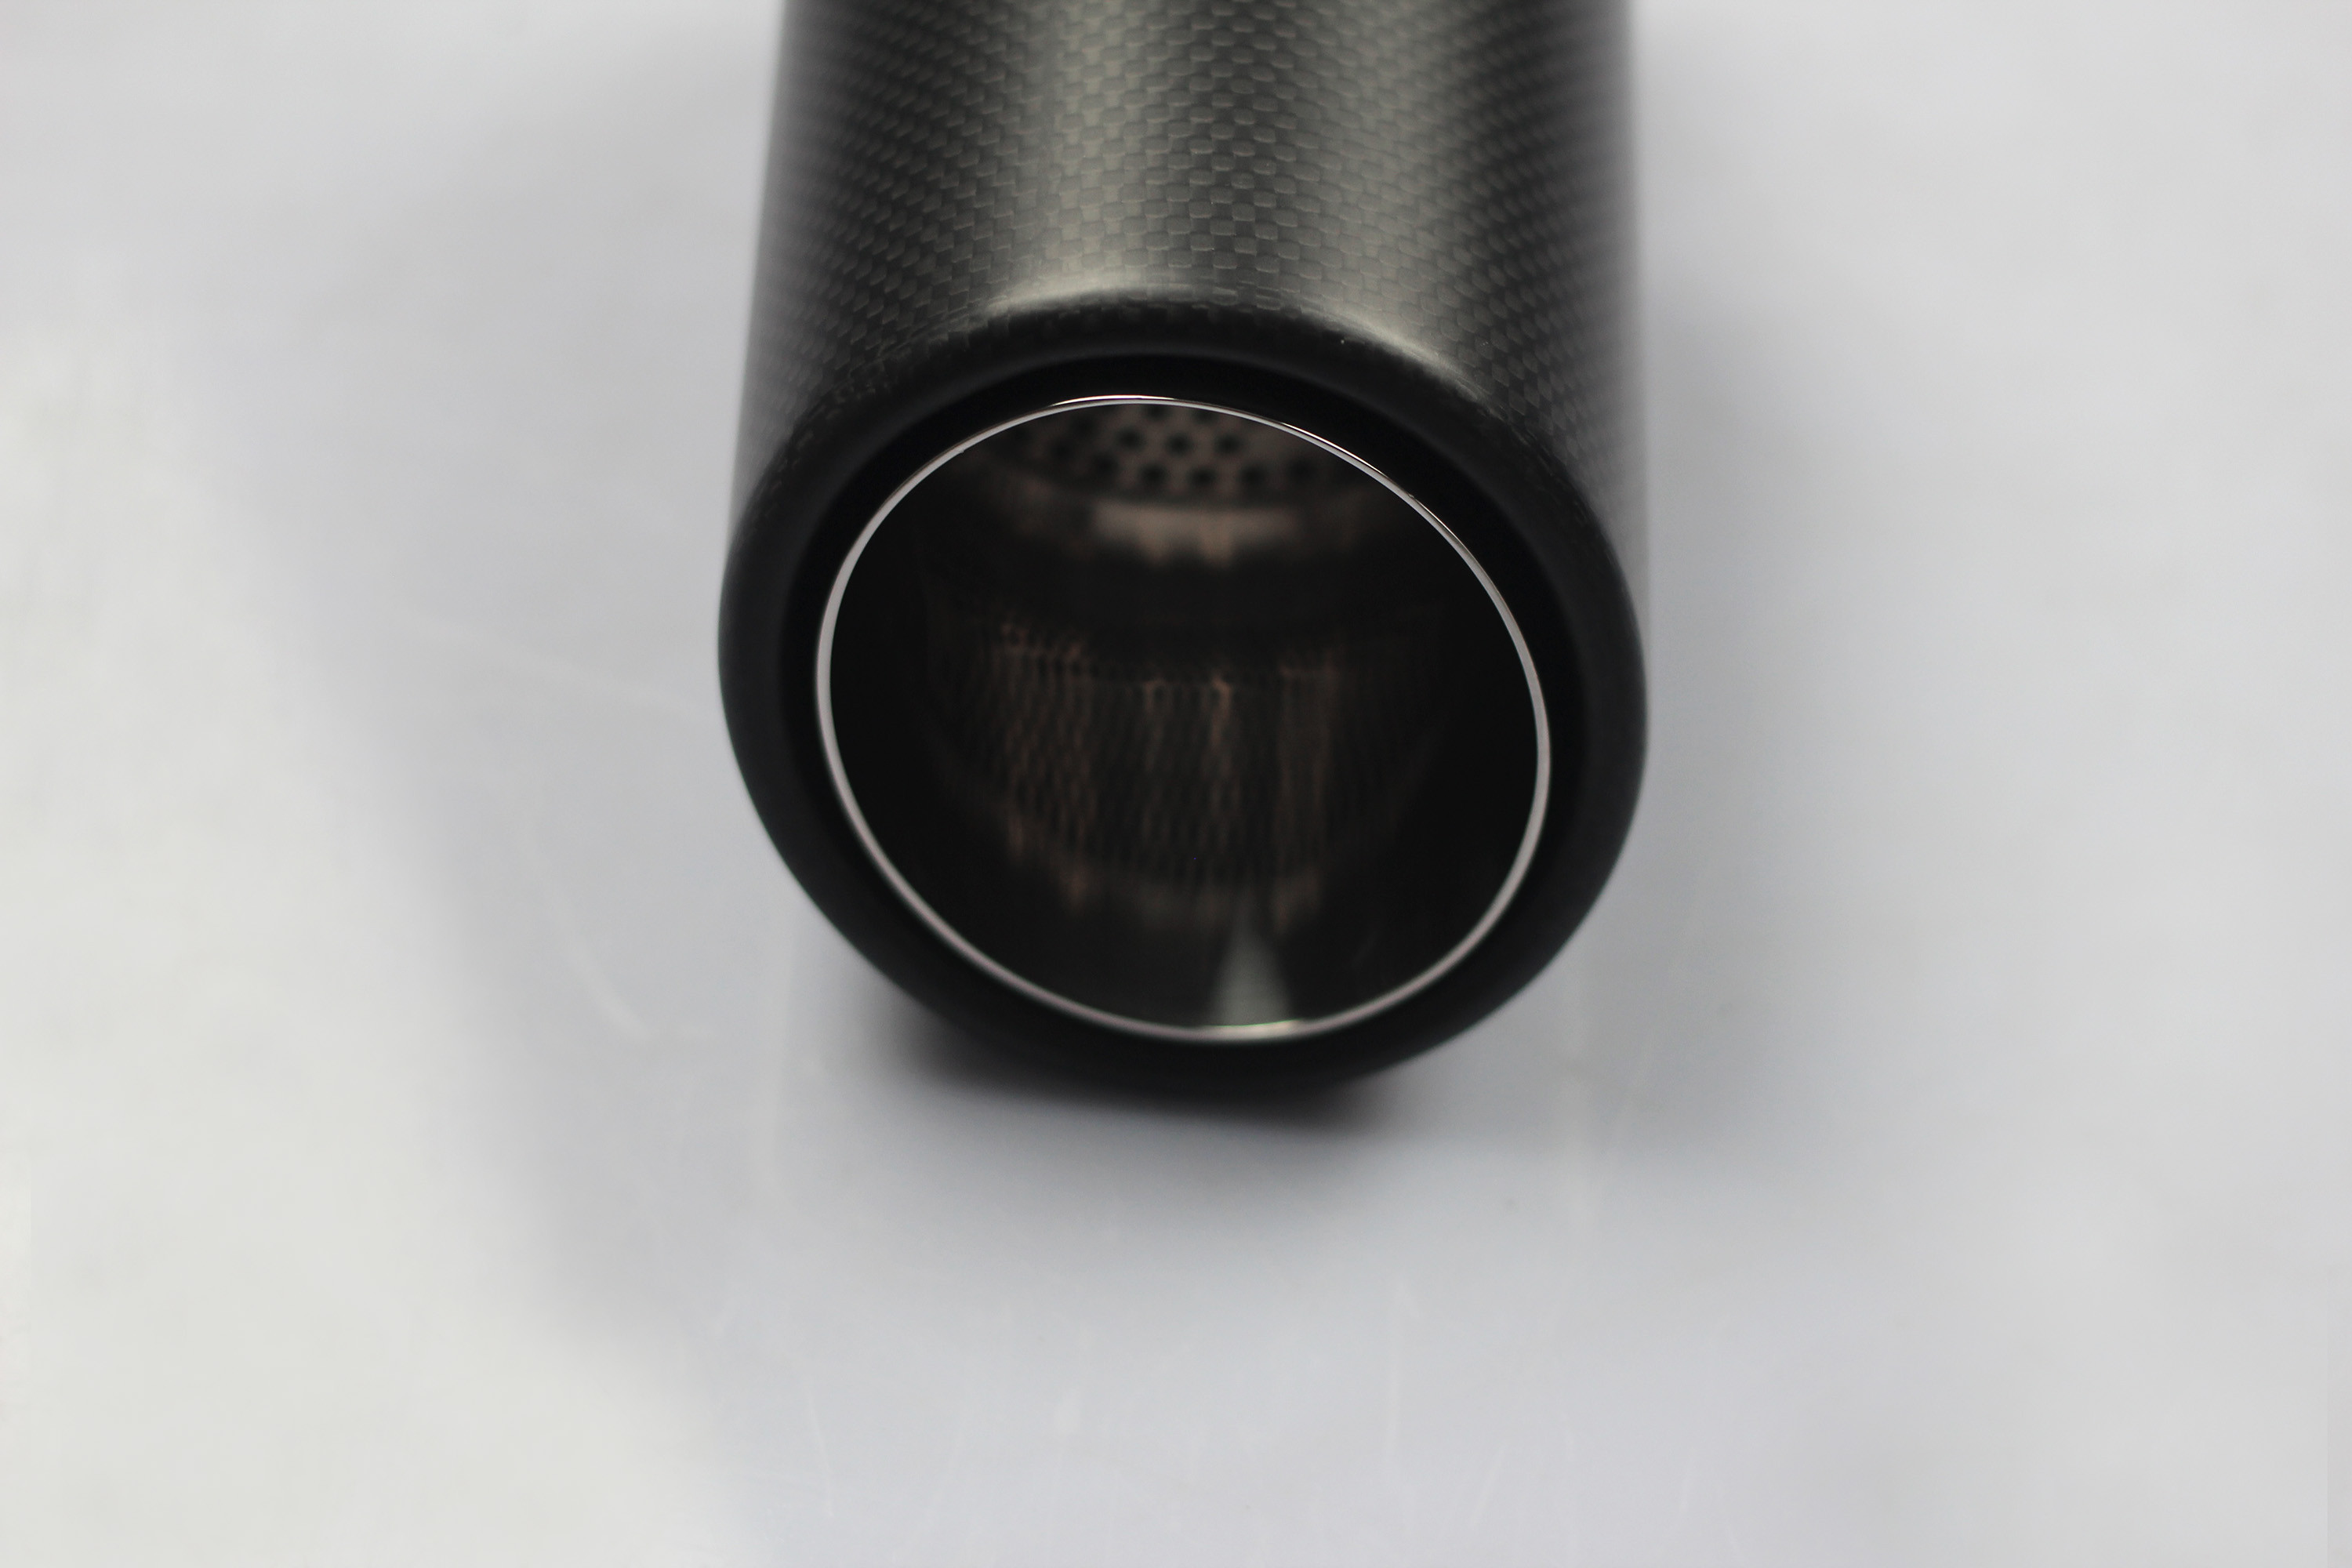 carbon fiber exhaust pipe